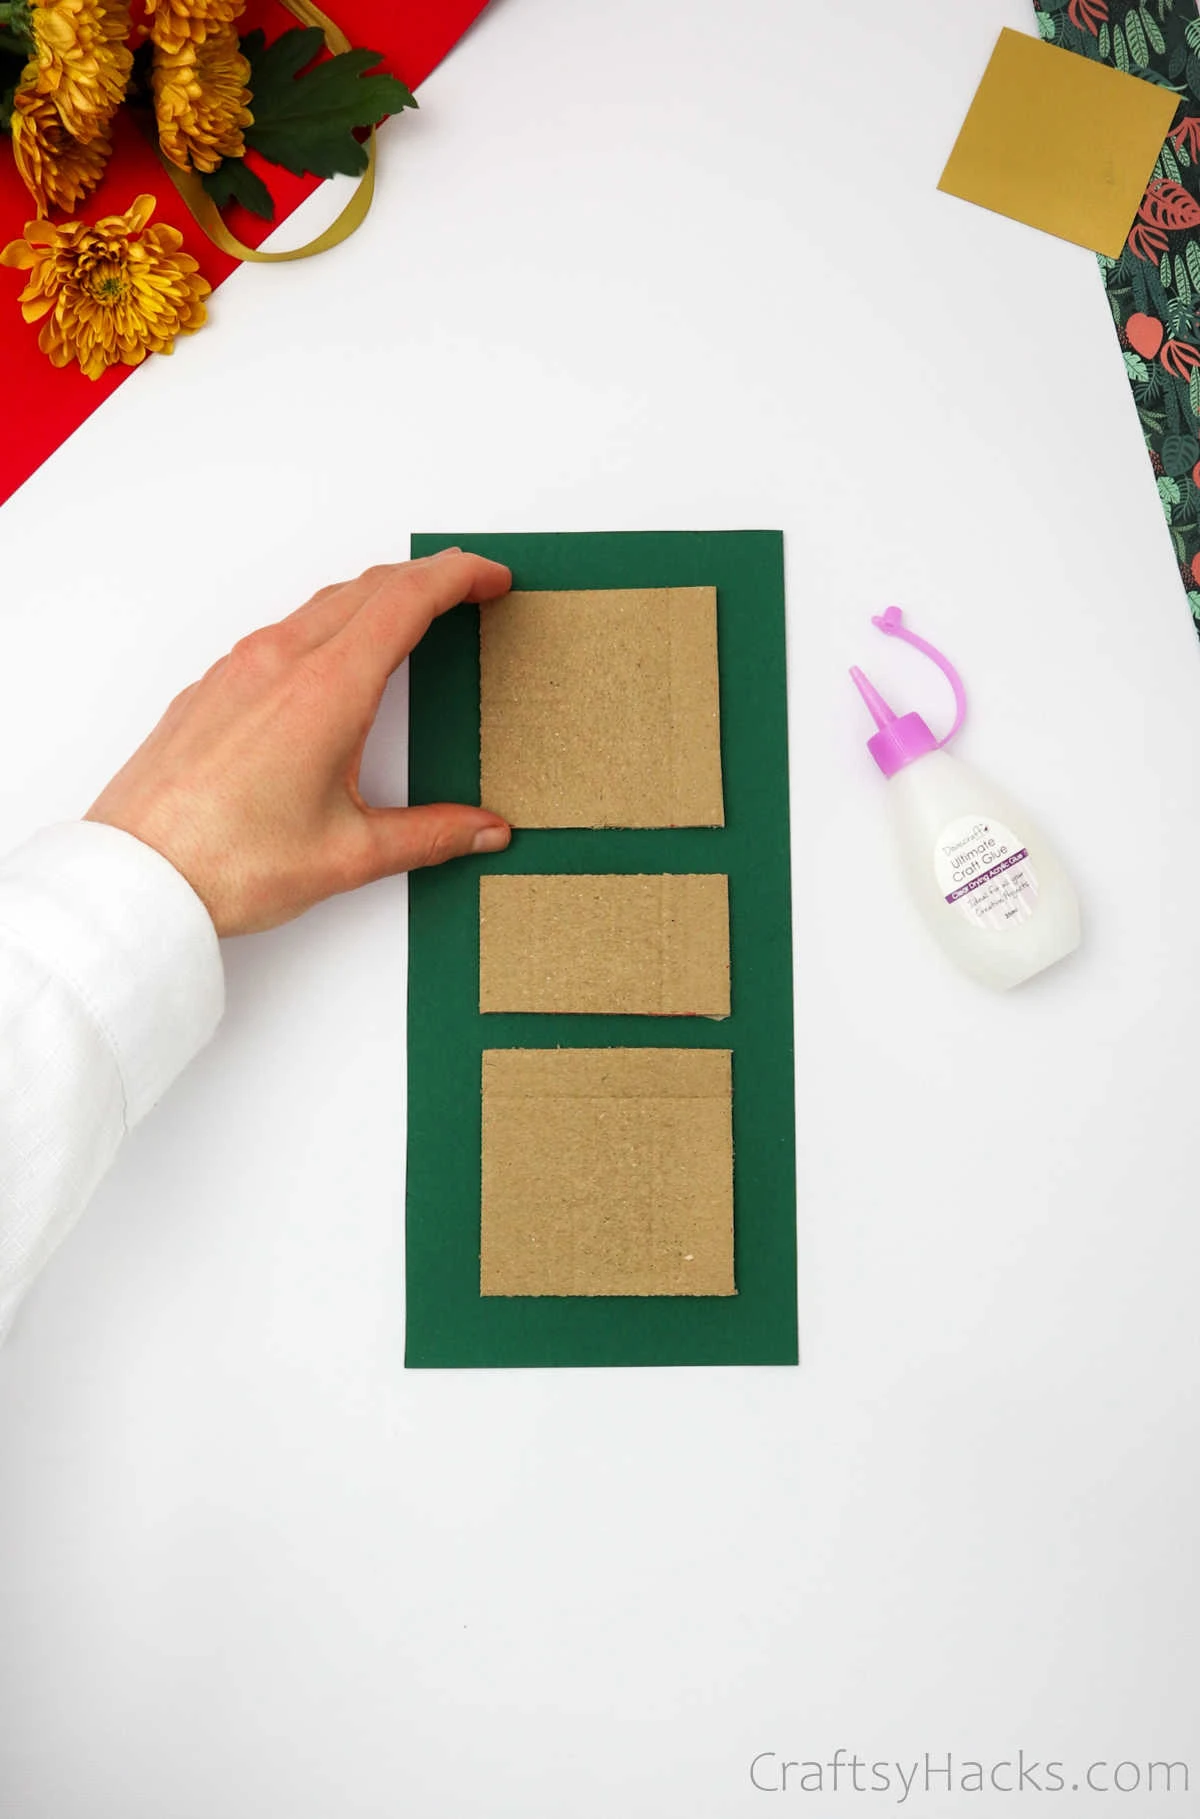 glueing cardboard squares to paper